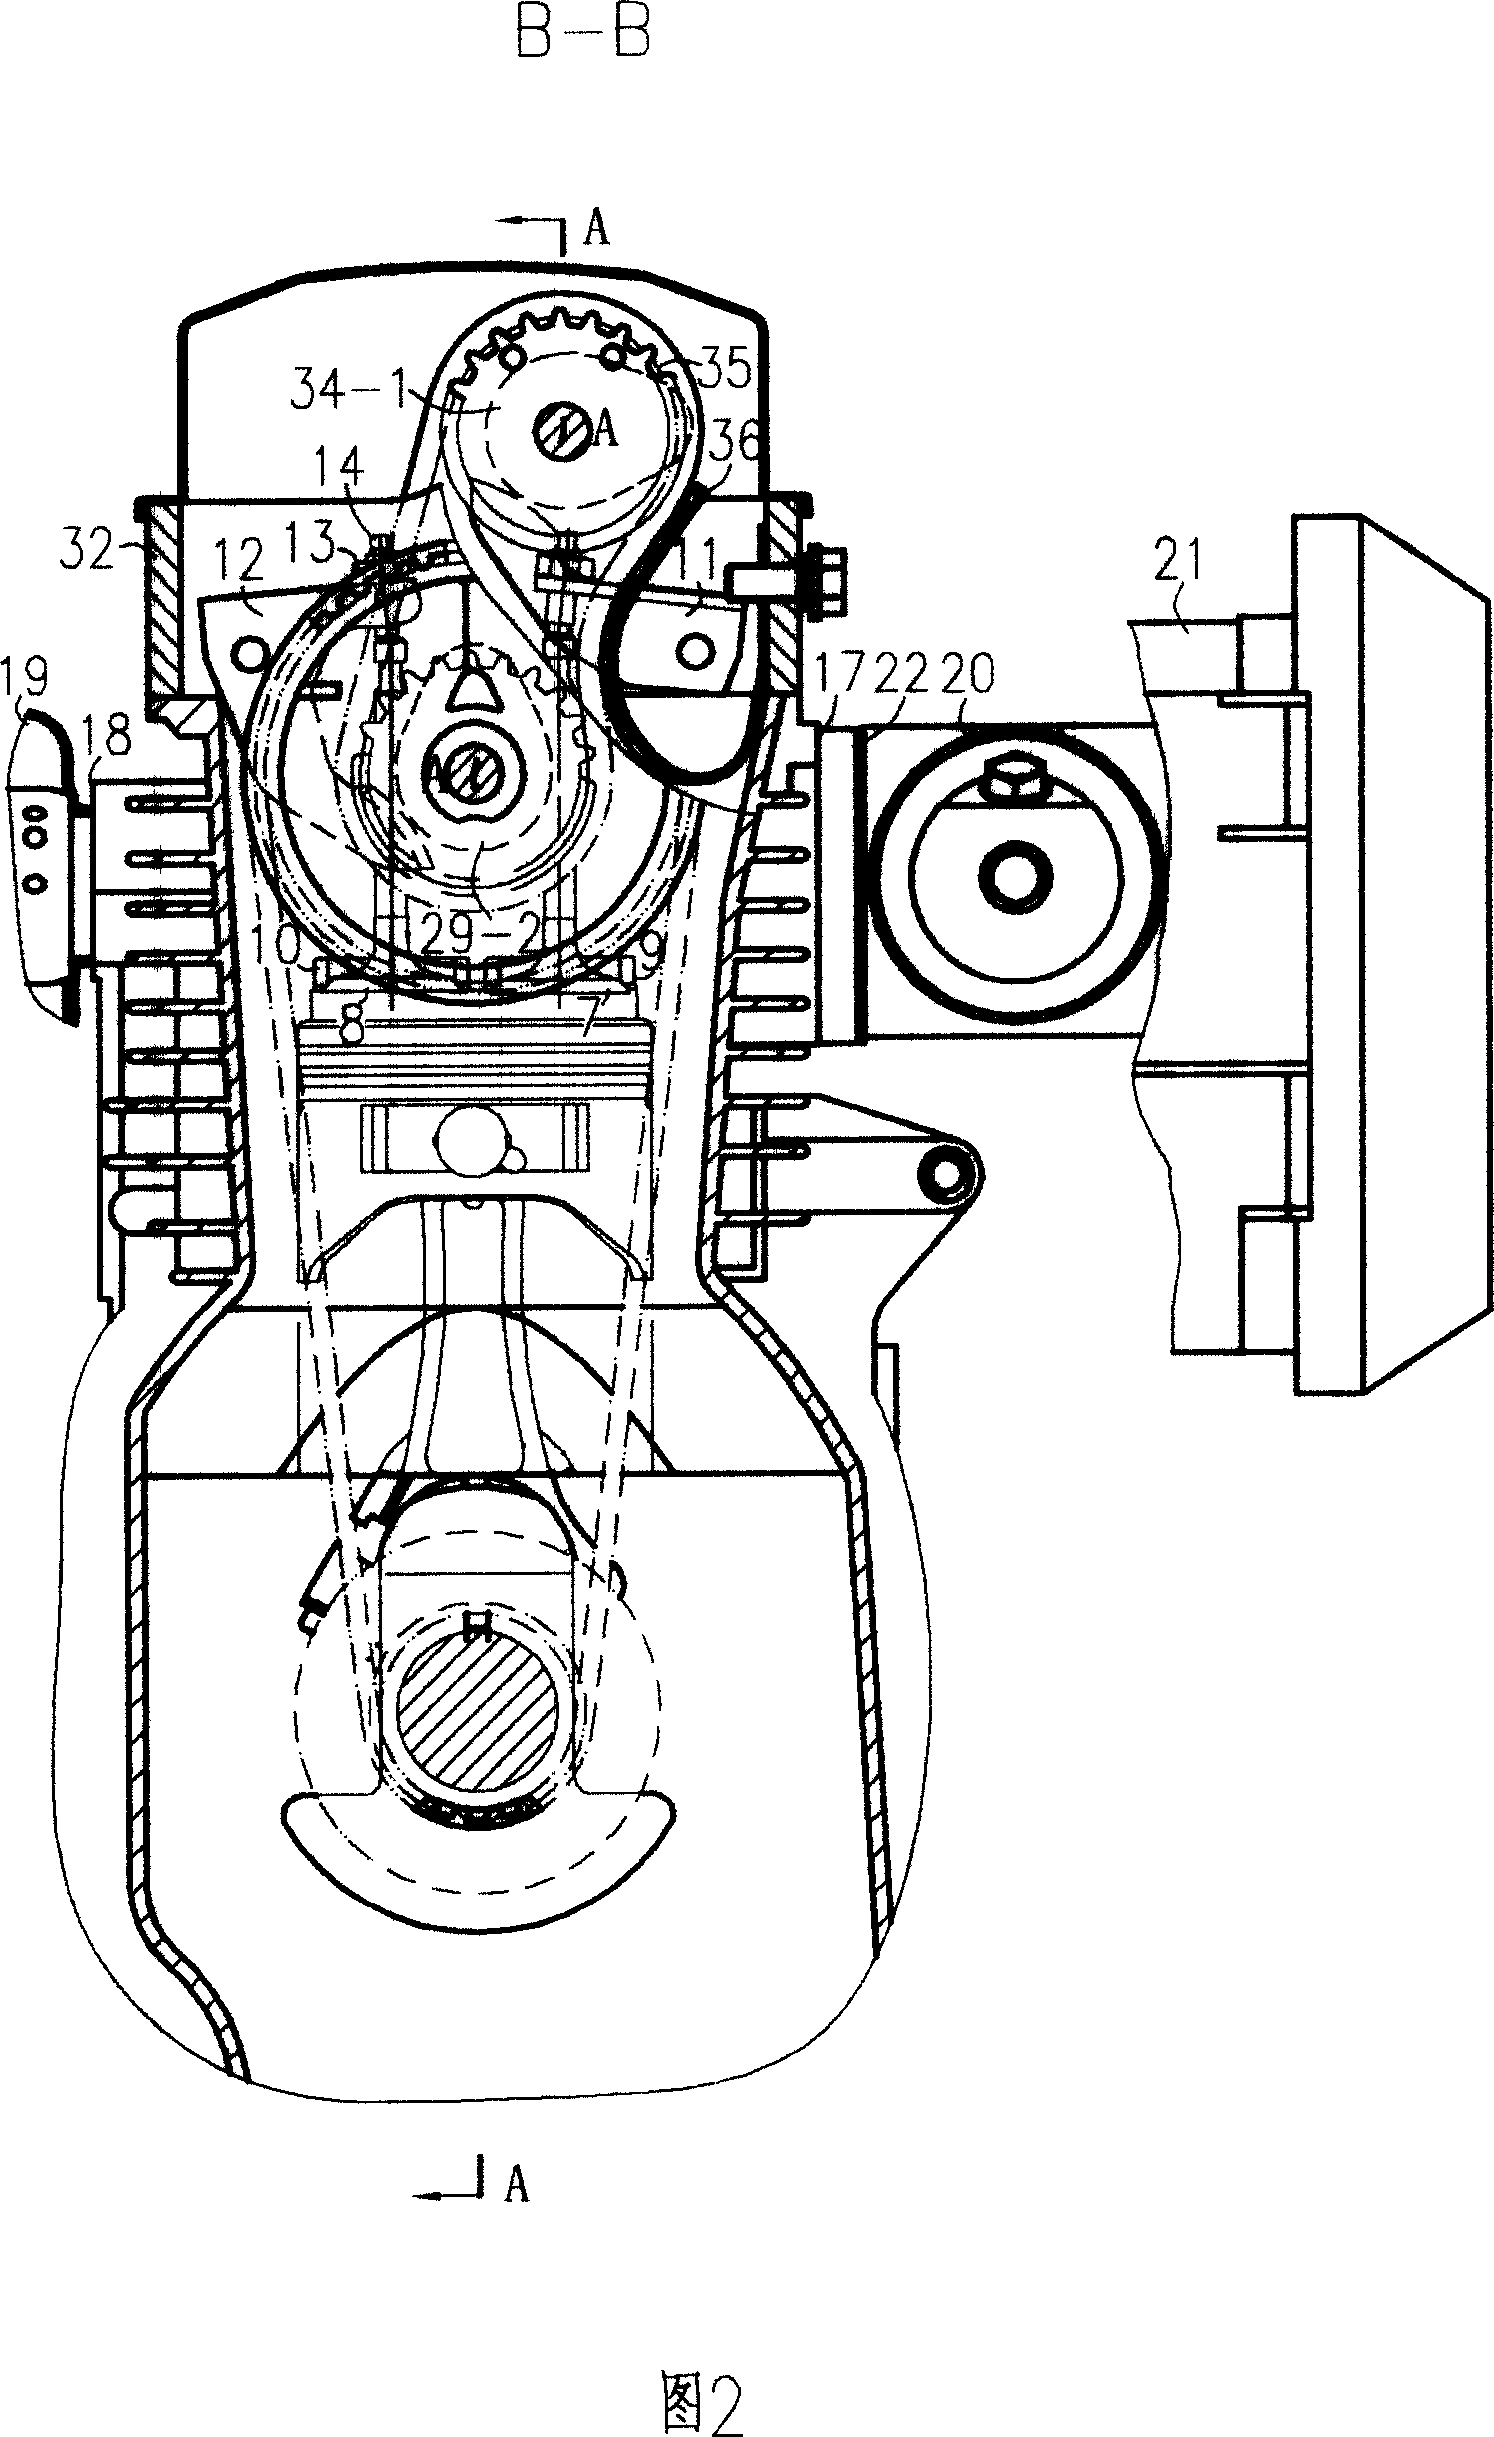 Overhead cam engine